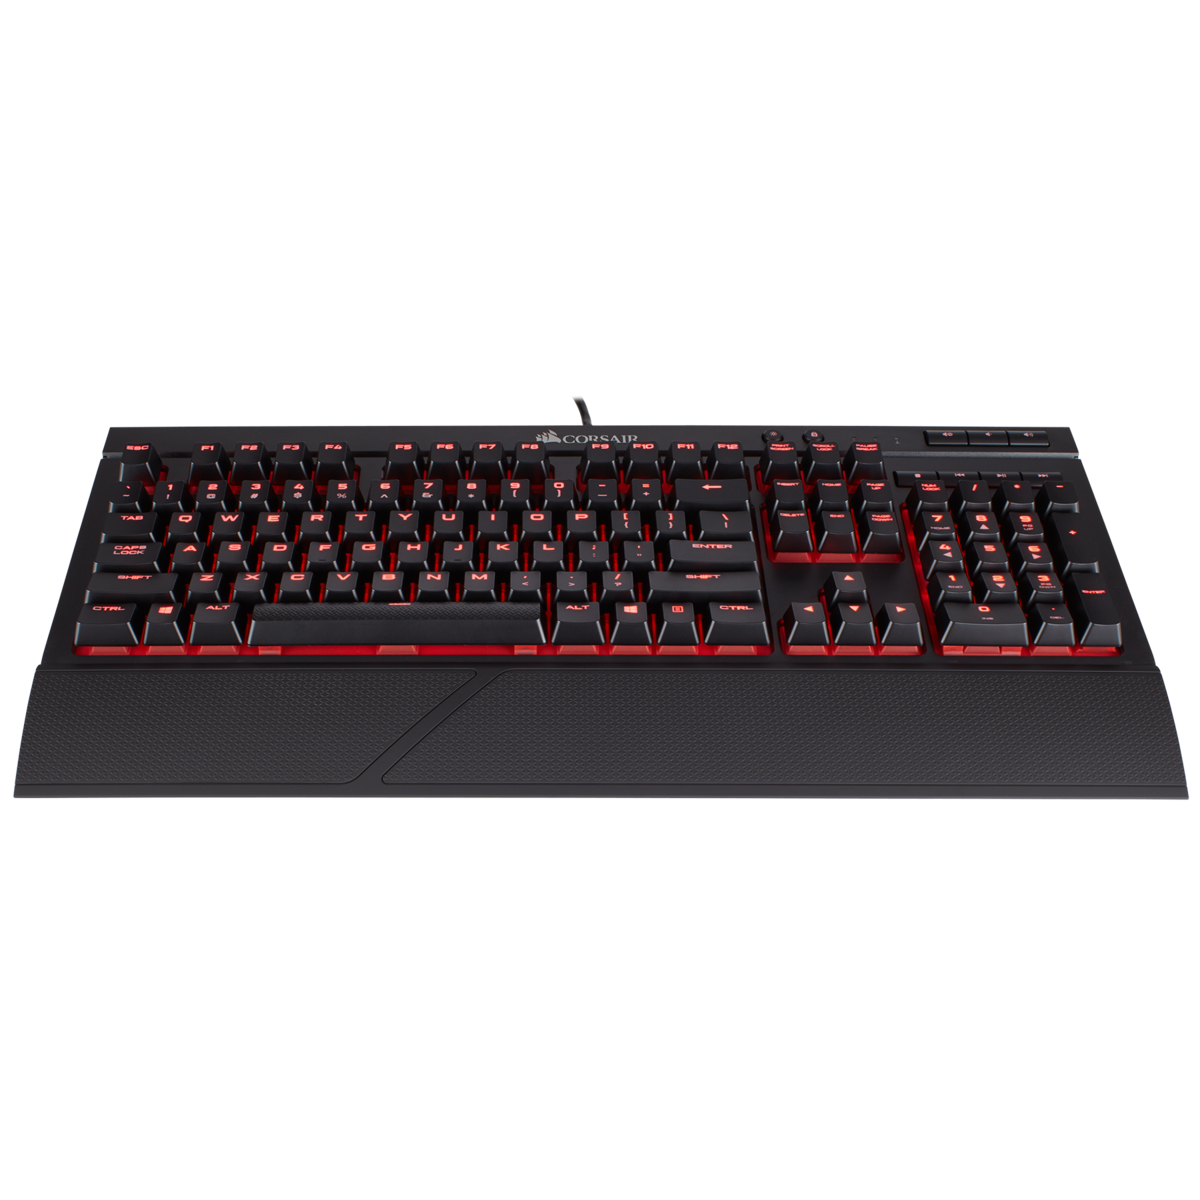 Corsair K68 Mechanical Gaming Keyboard, Red Cherry